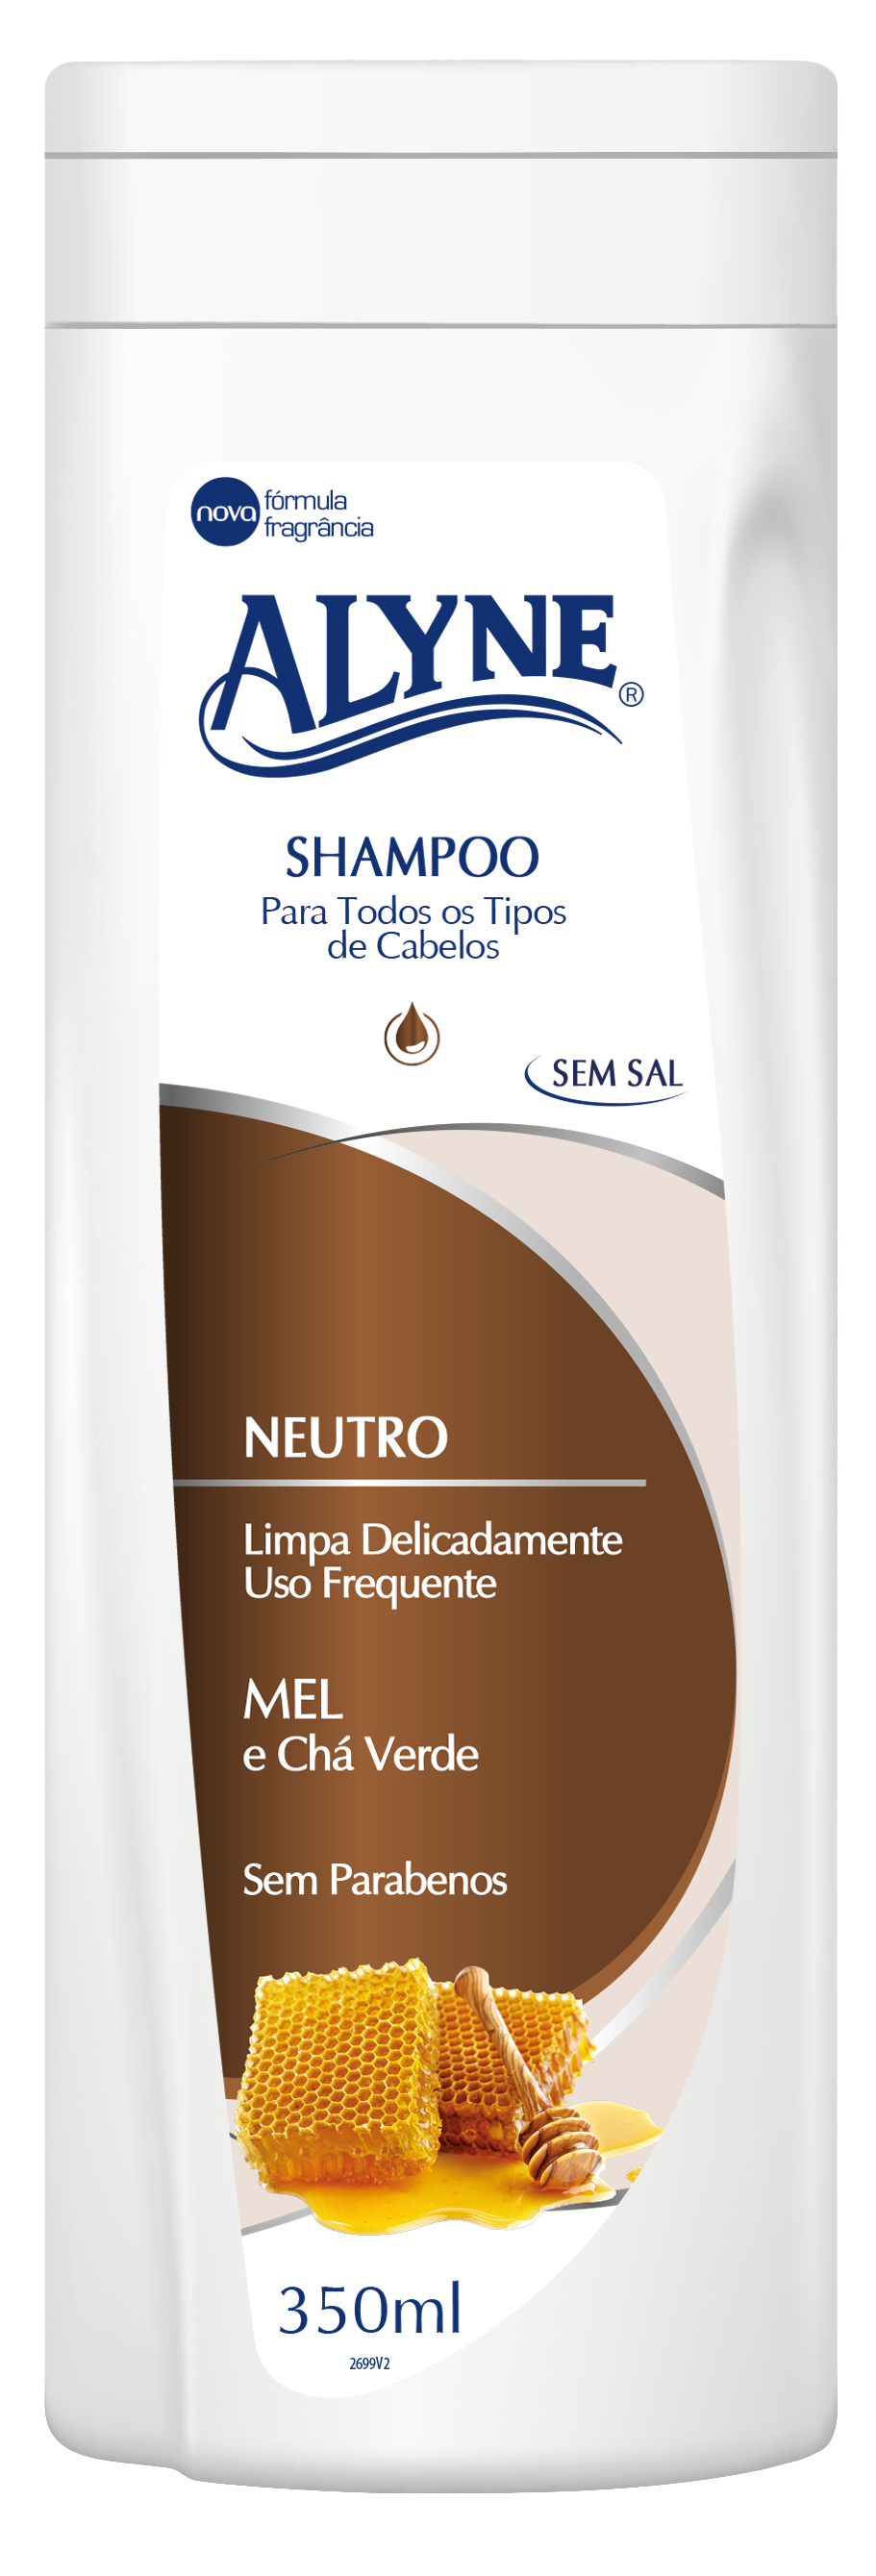 Shampoo Alyne Neutro 350ml